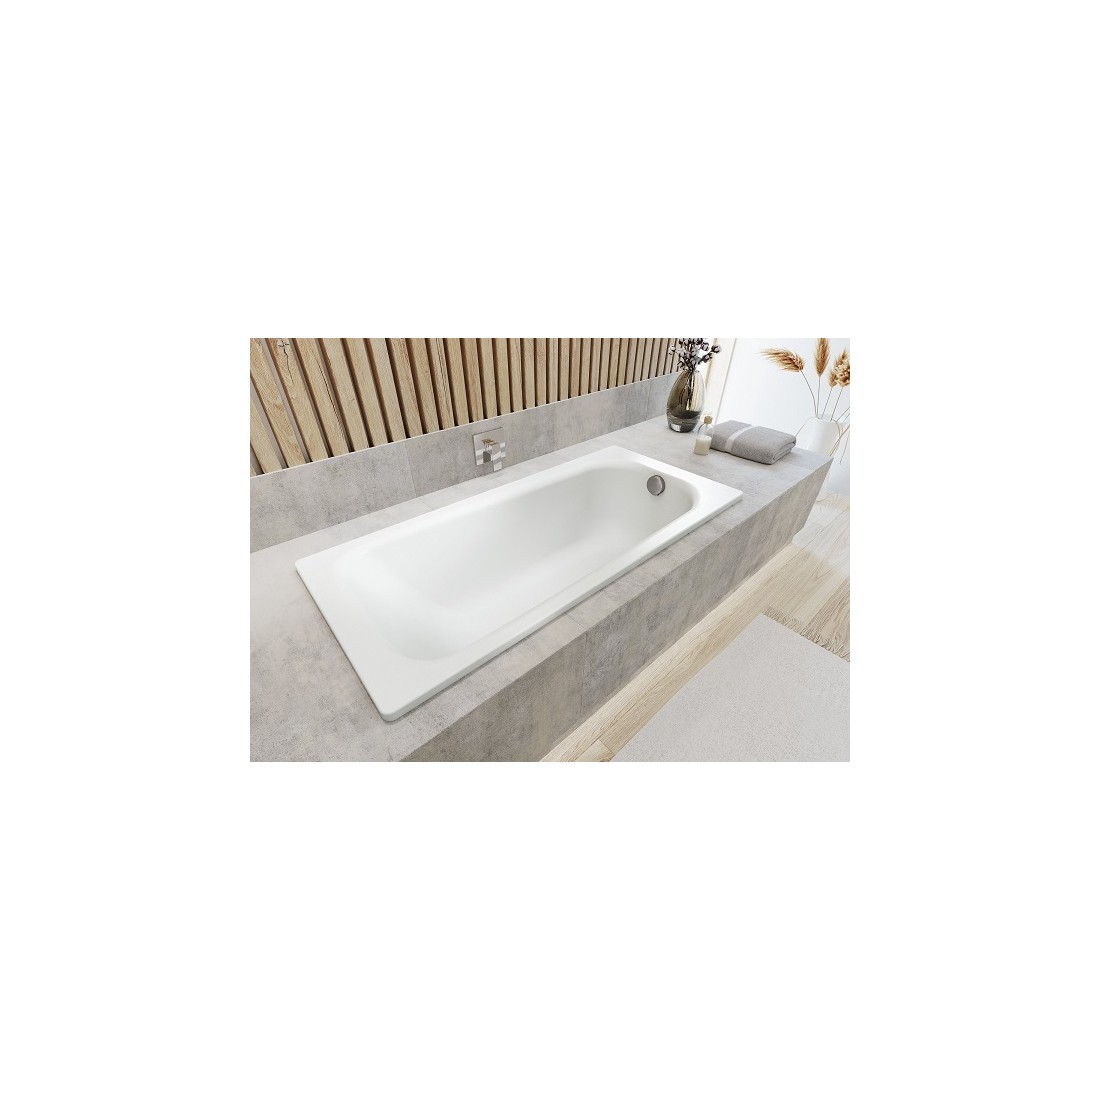 Plieninė vonia Kaldewei Saniform Plus 160x75, mod. 372-1